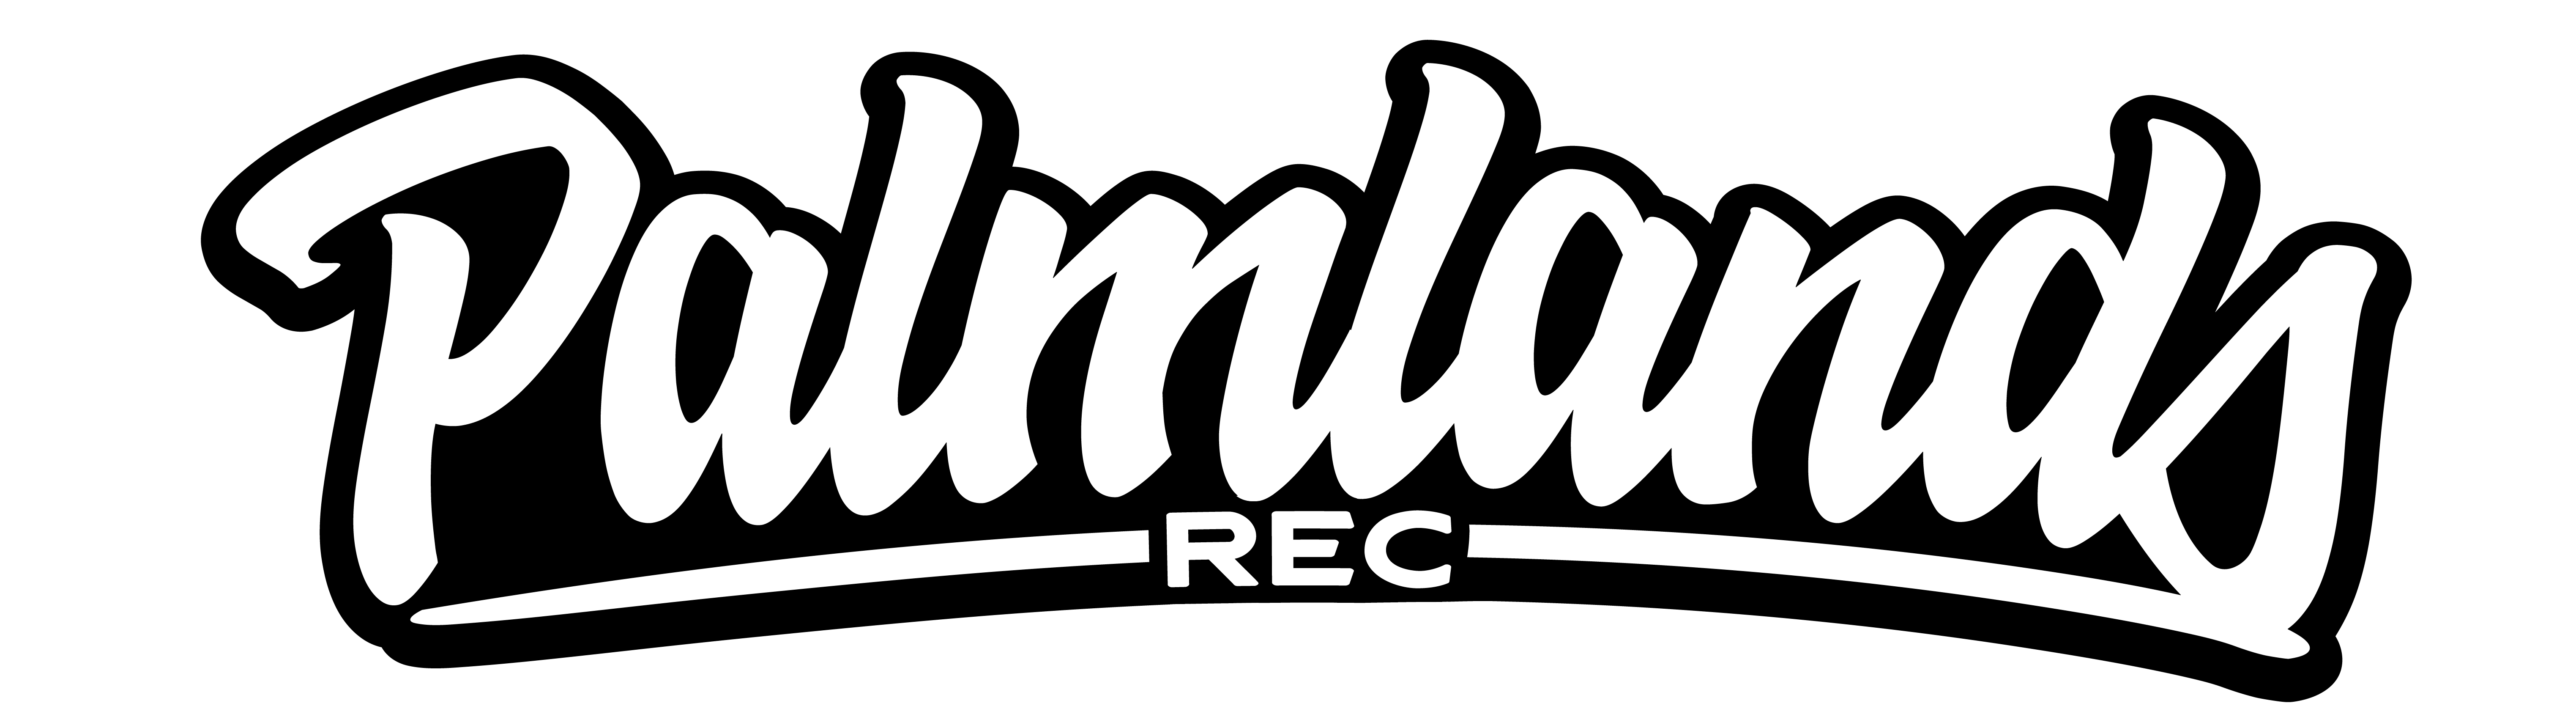 Palmlands Records Tech House Label Logo